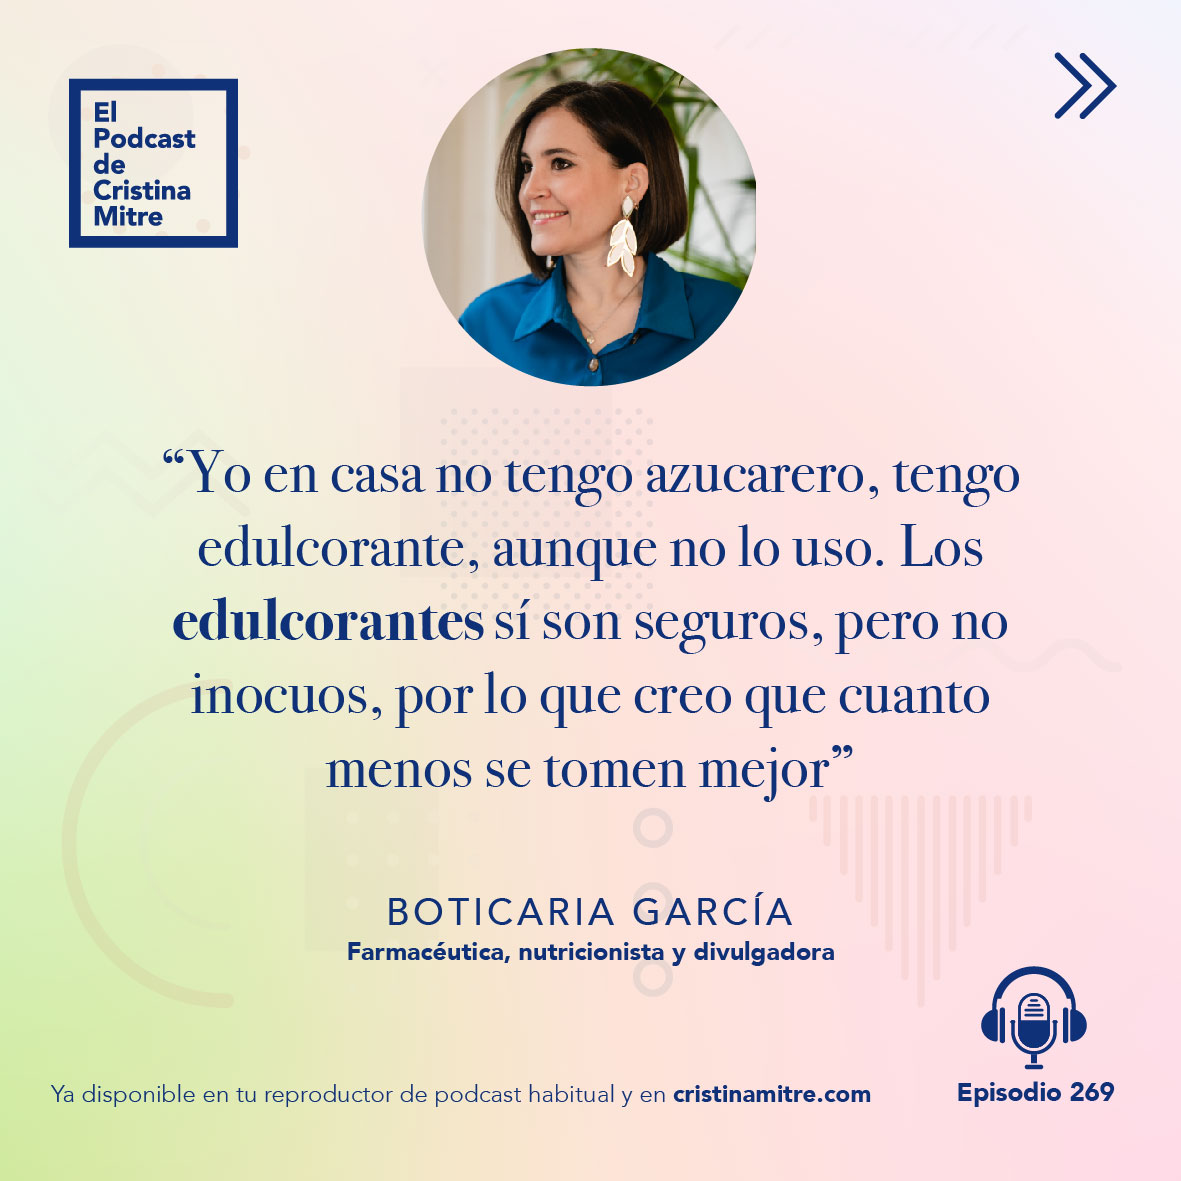 Podcast de Cristina Mitre Boticaria Garcia edulcorantes